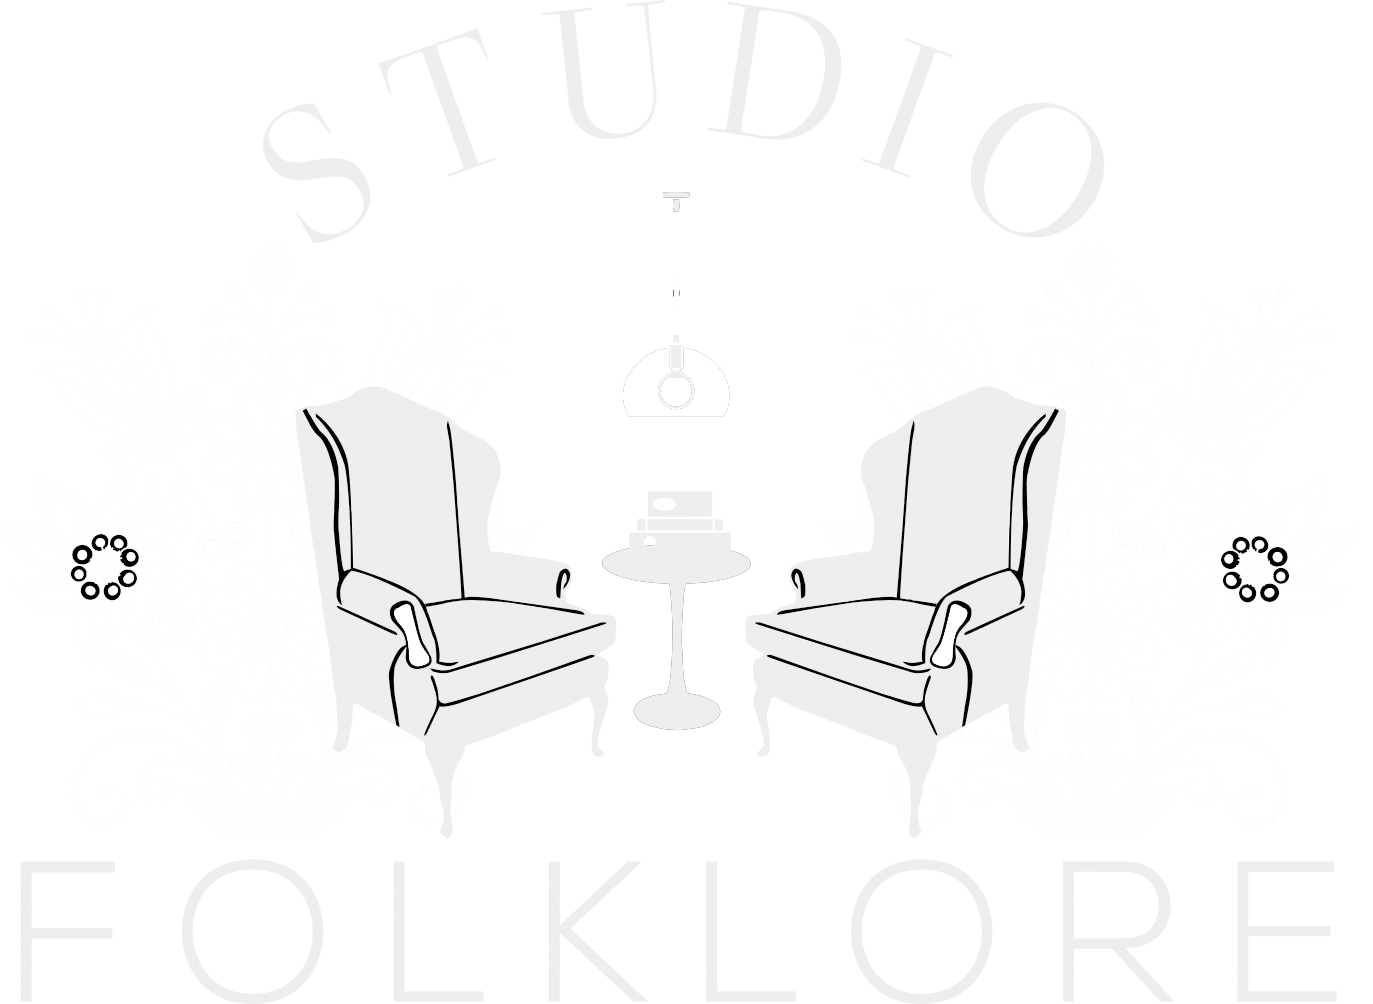 Studio Folklore